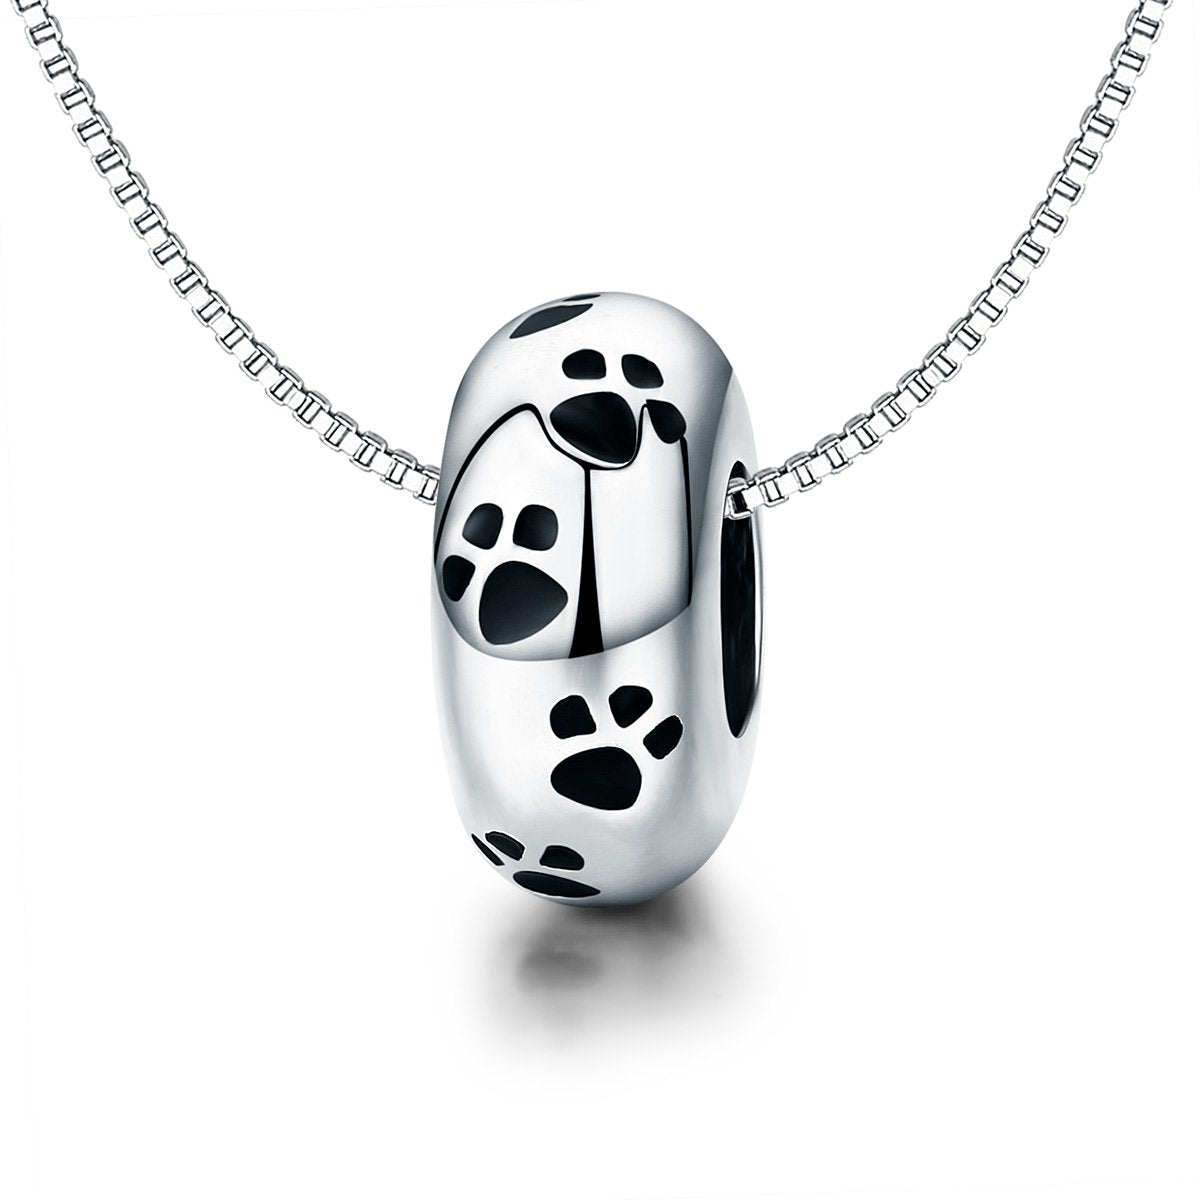 Sterling 925 silver charm the footprint circle bead pendant fits Pandora charm and European charm bracelet Xaxe.com